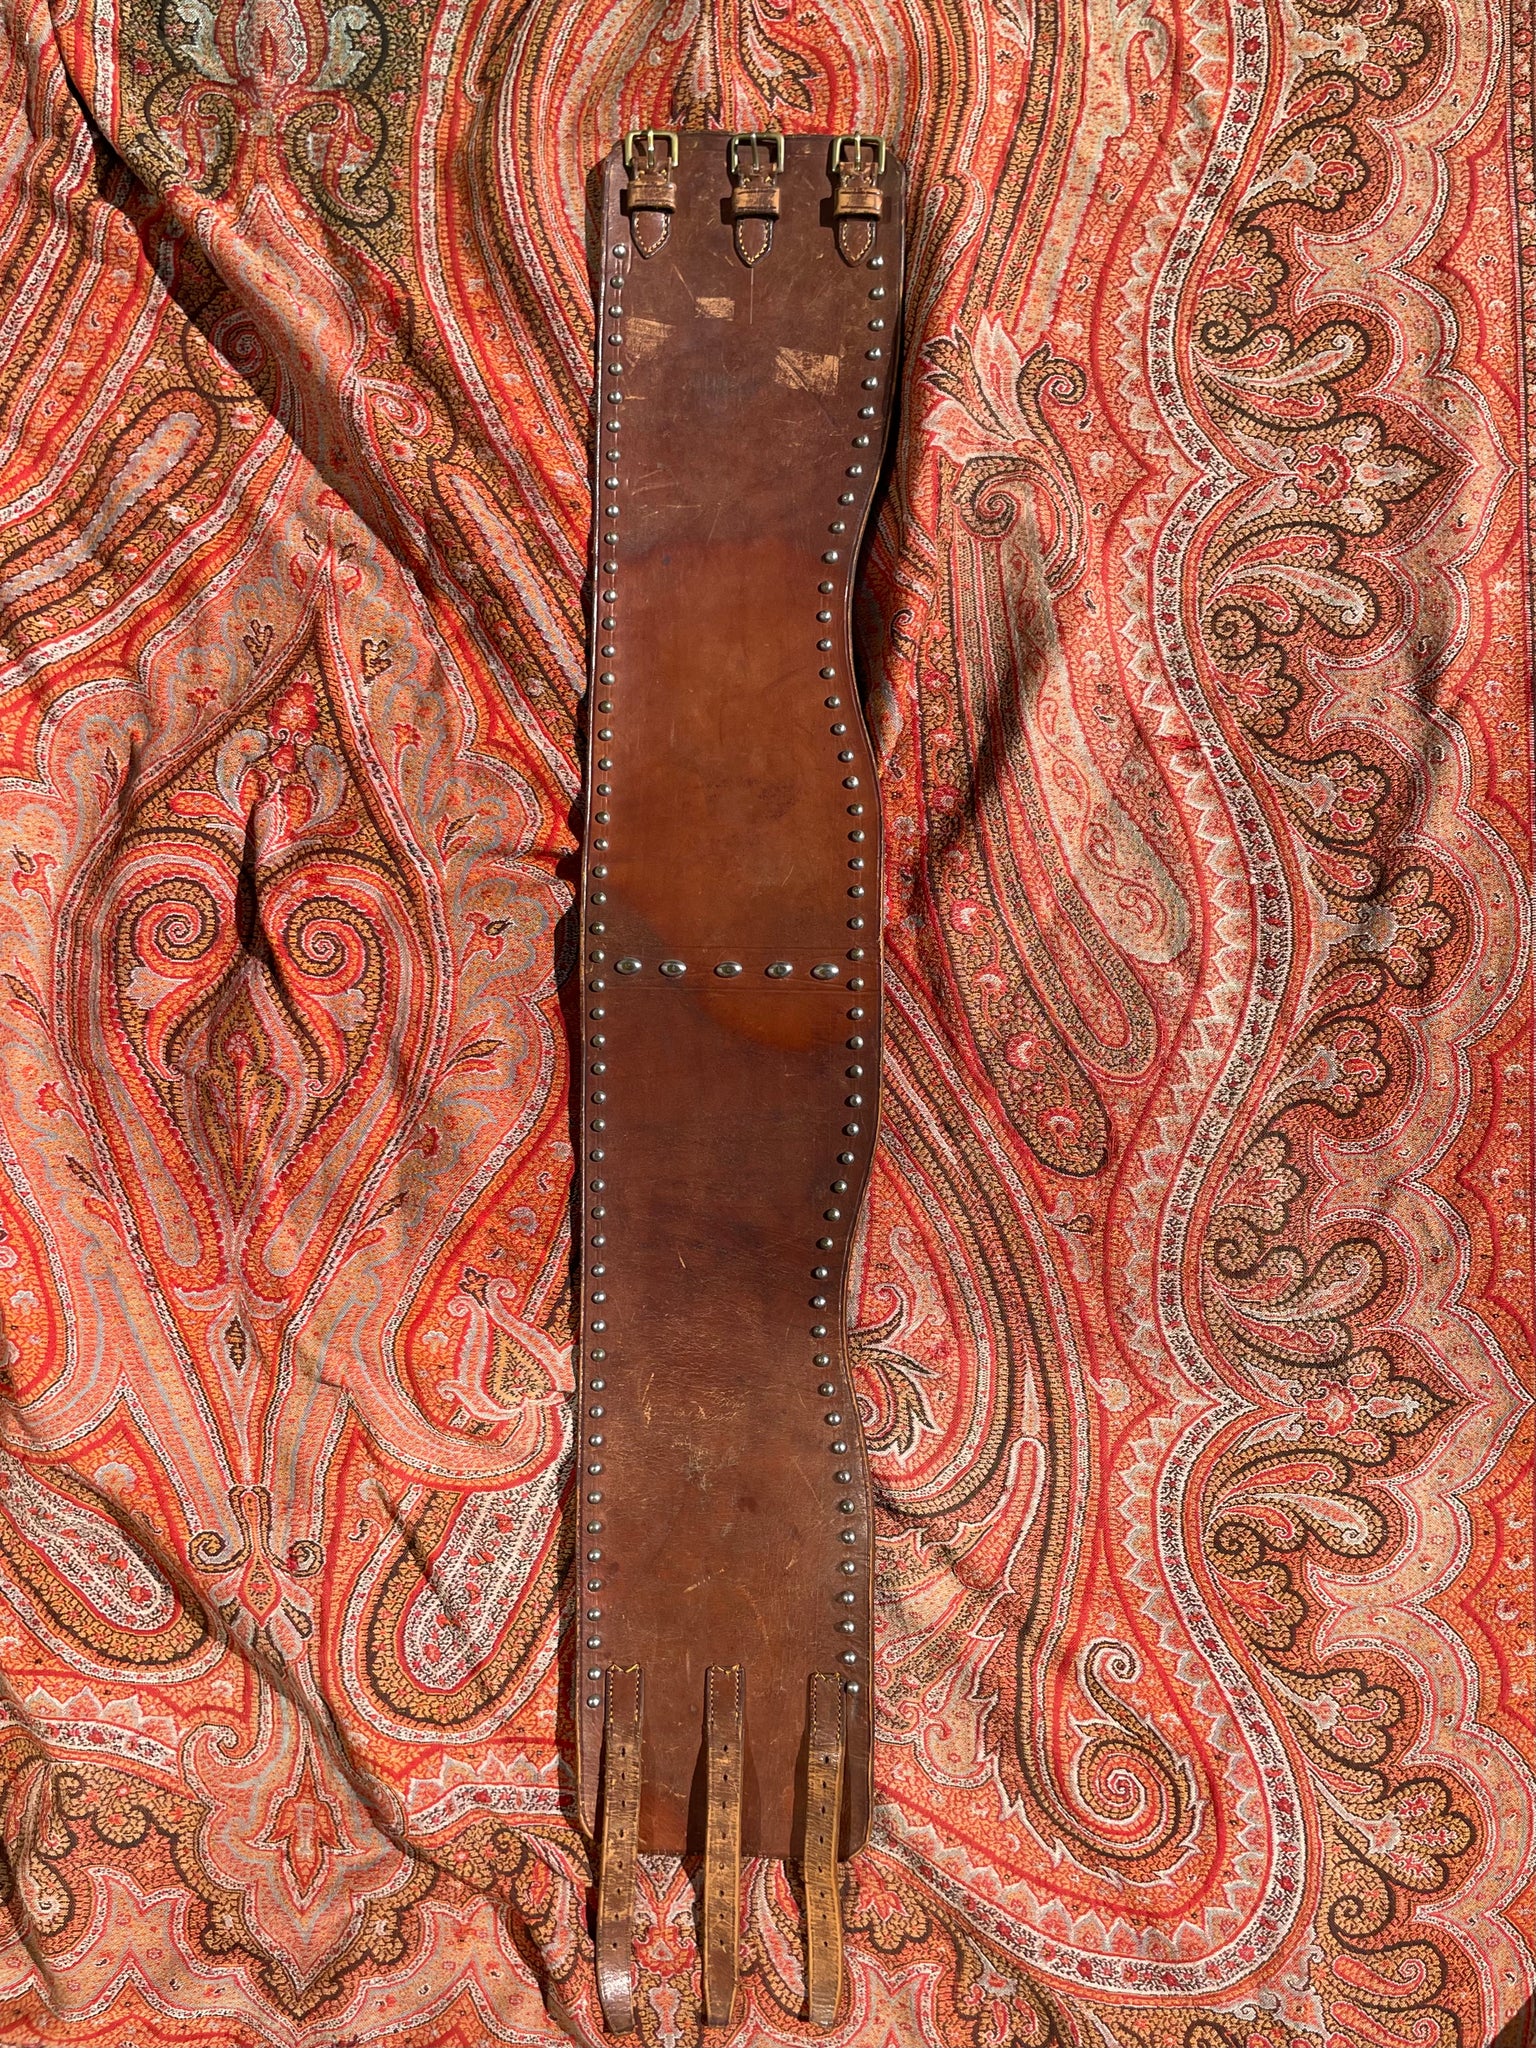 1930s-1940s Studded Leather Kidney Belt